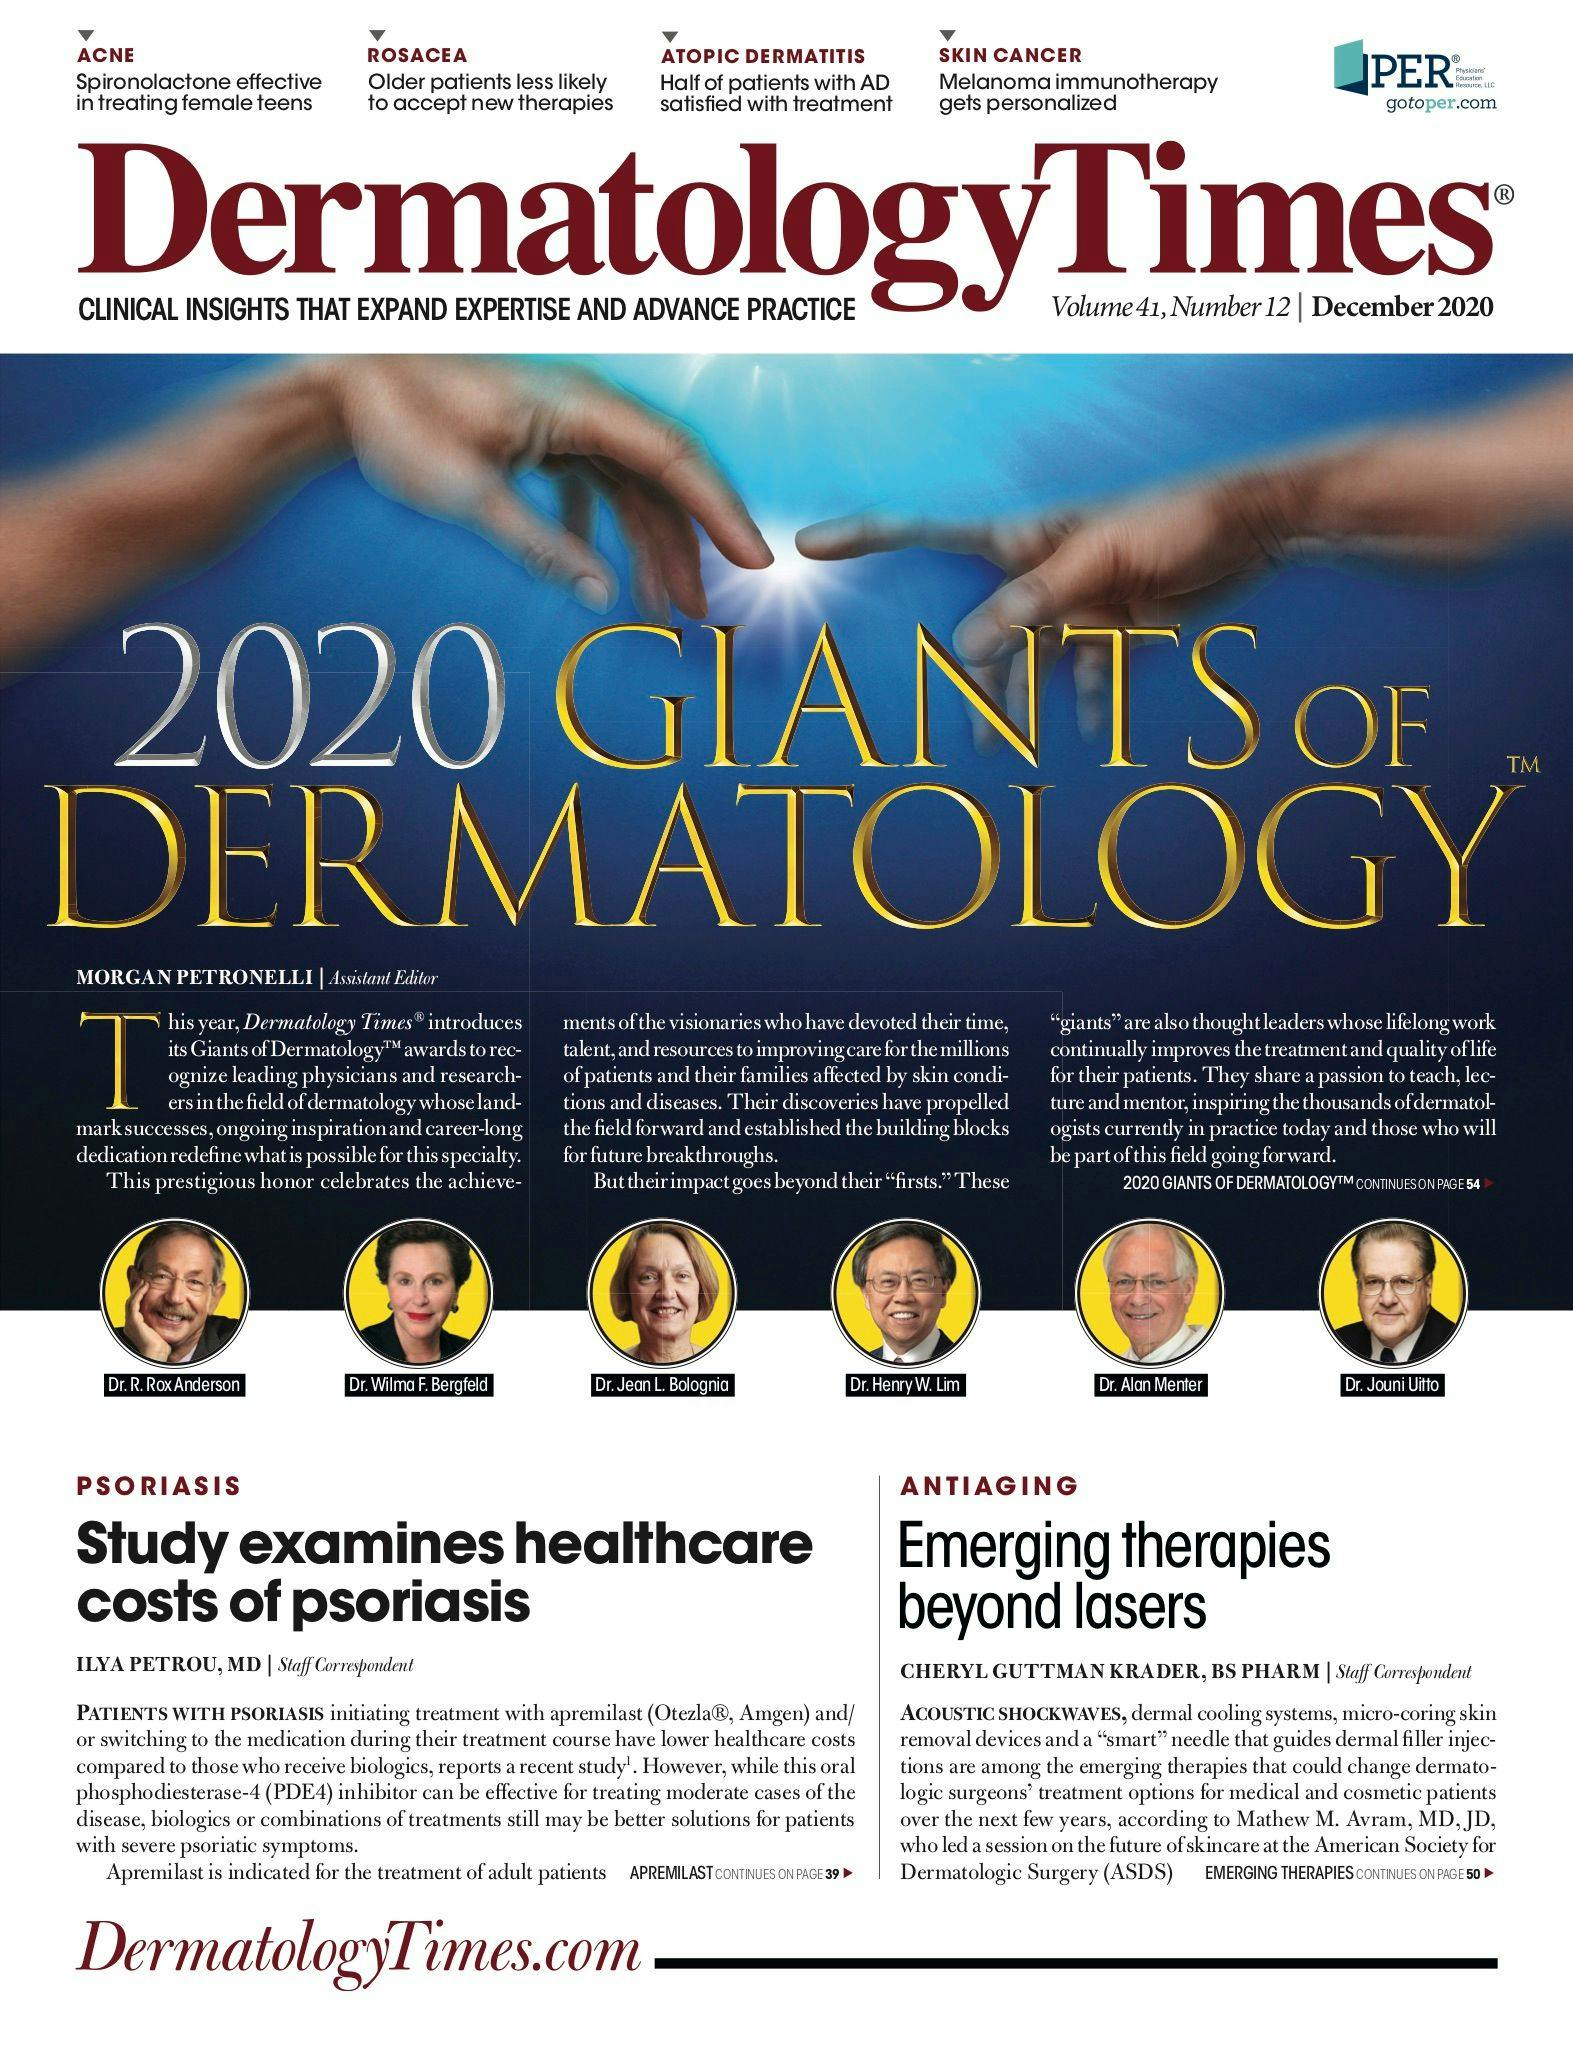 Dermatology Times, December 2020 (Vol. 41, No. 12)